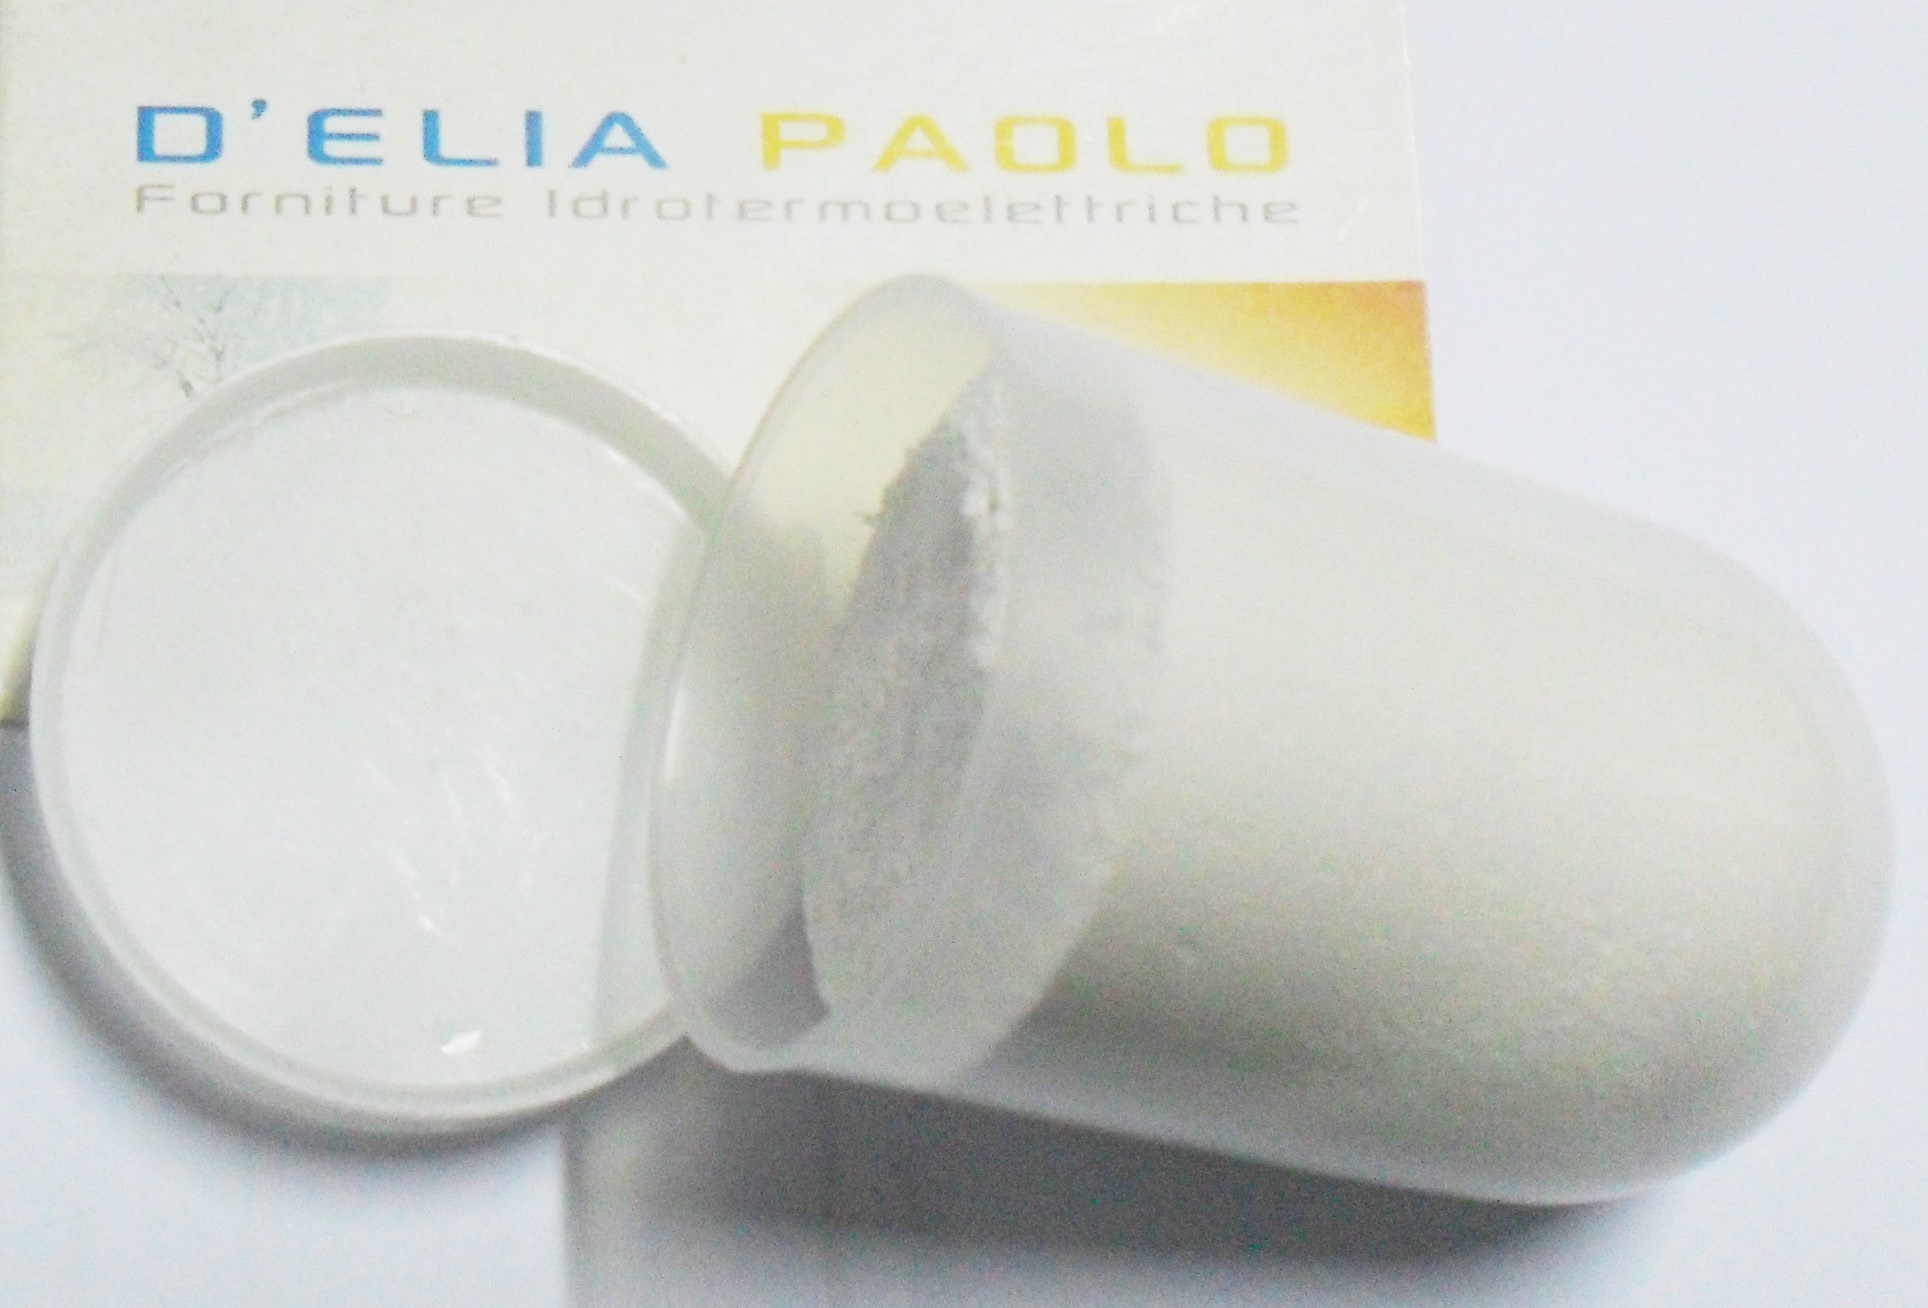 Atlas Filtri - Dosatore Polifosfati Mod. Dosaplus 1-2 In Polvere Da 1/2